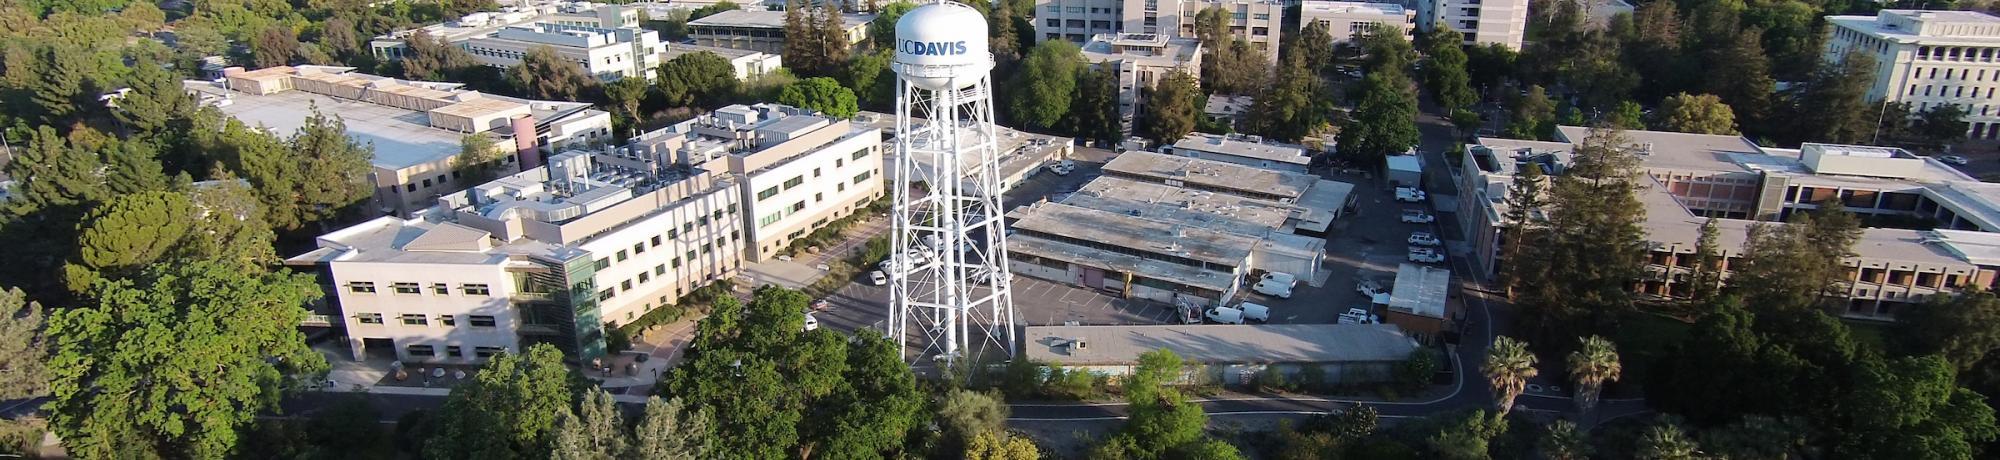 UC Davis water tower and campus Birdseye view